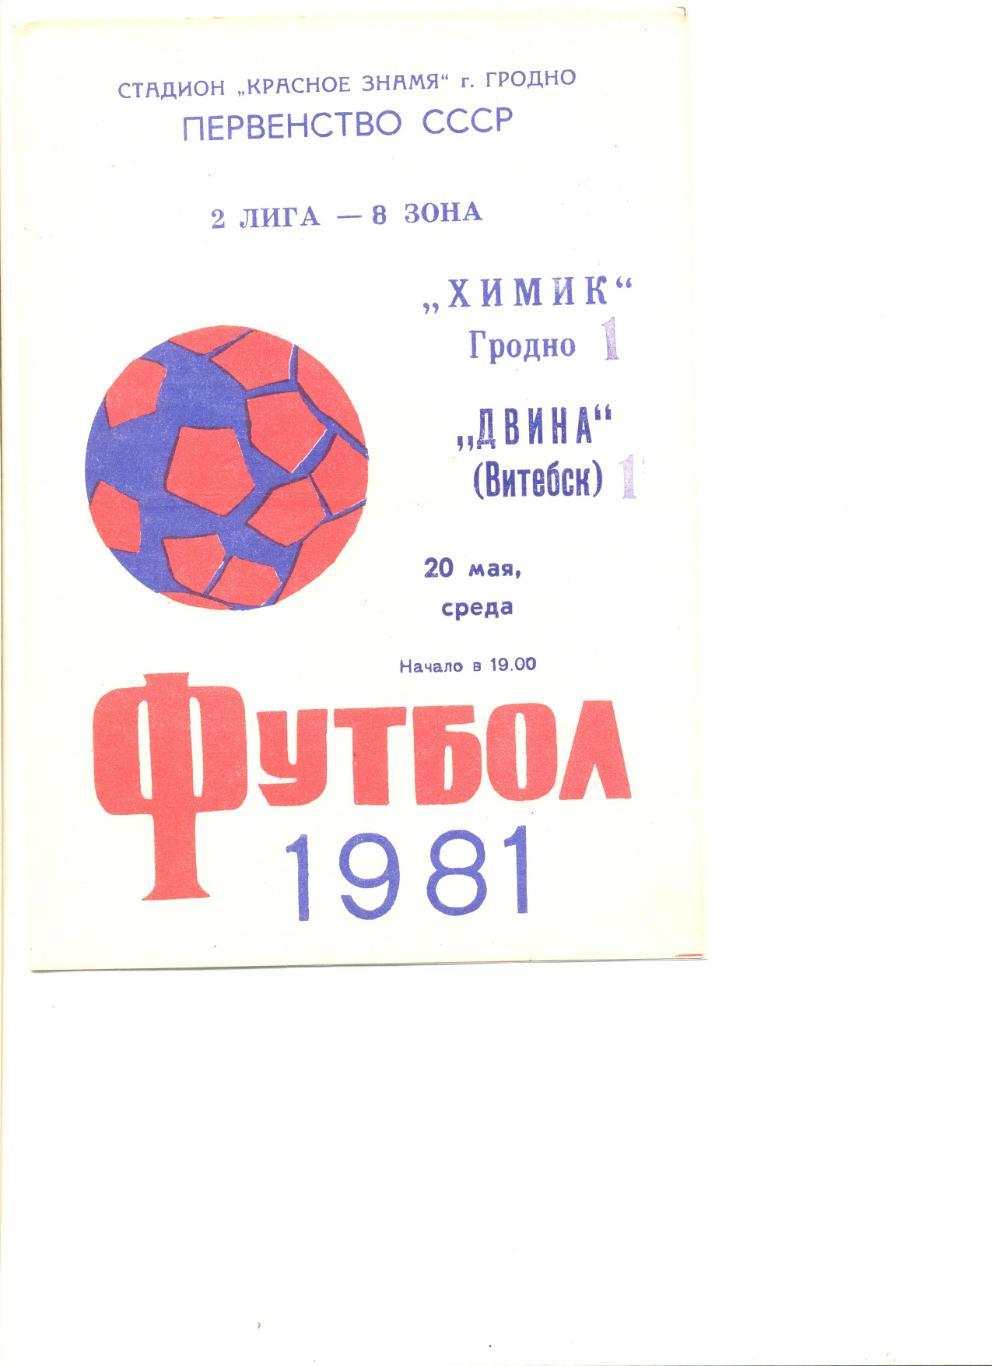 Химик Гродно - Двина Витебск 20.05.1981 г.